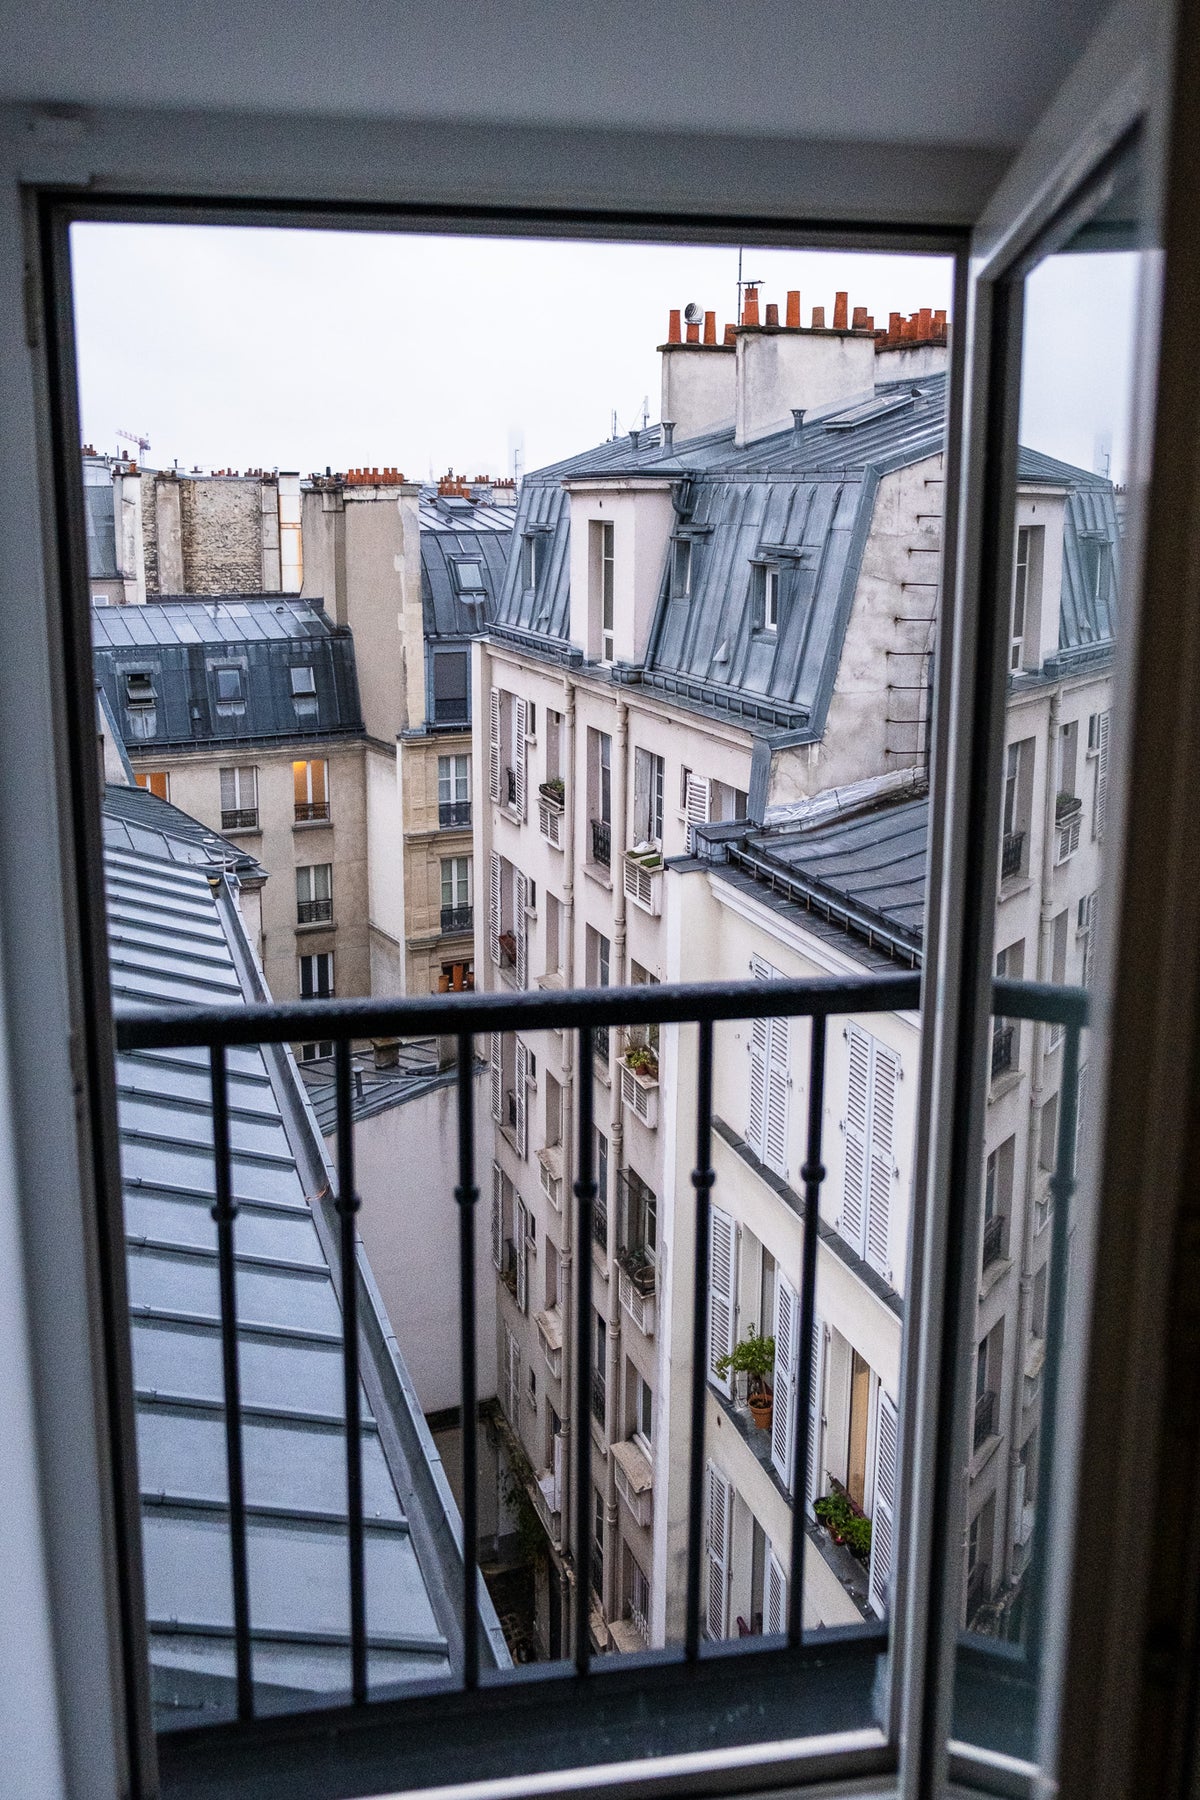 Parisian Rooftop Rainy Day View